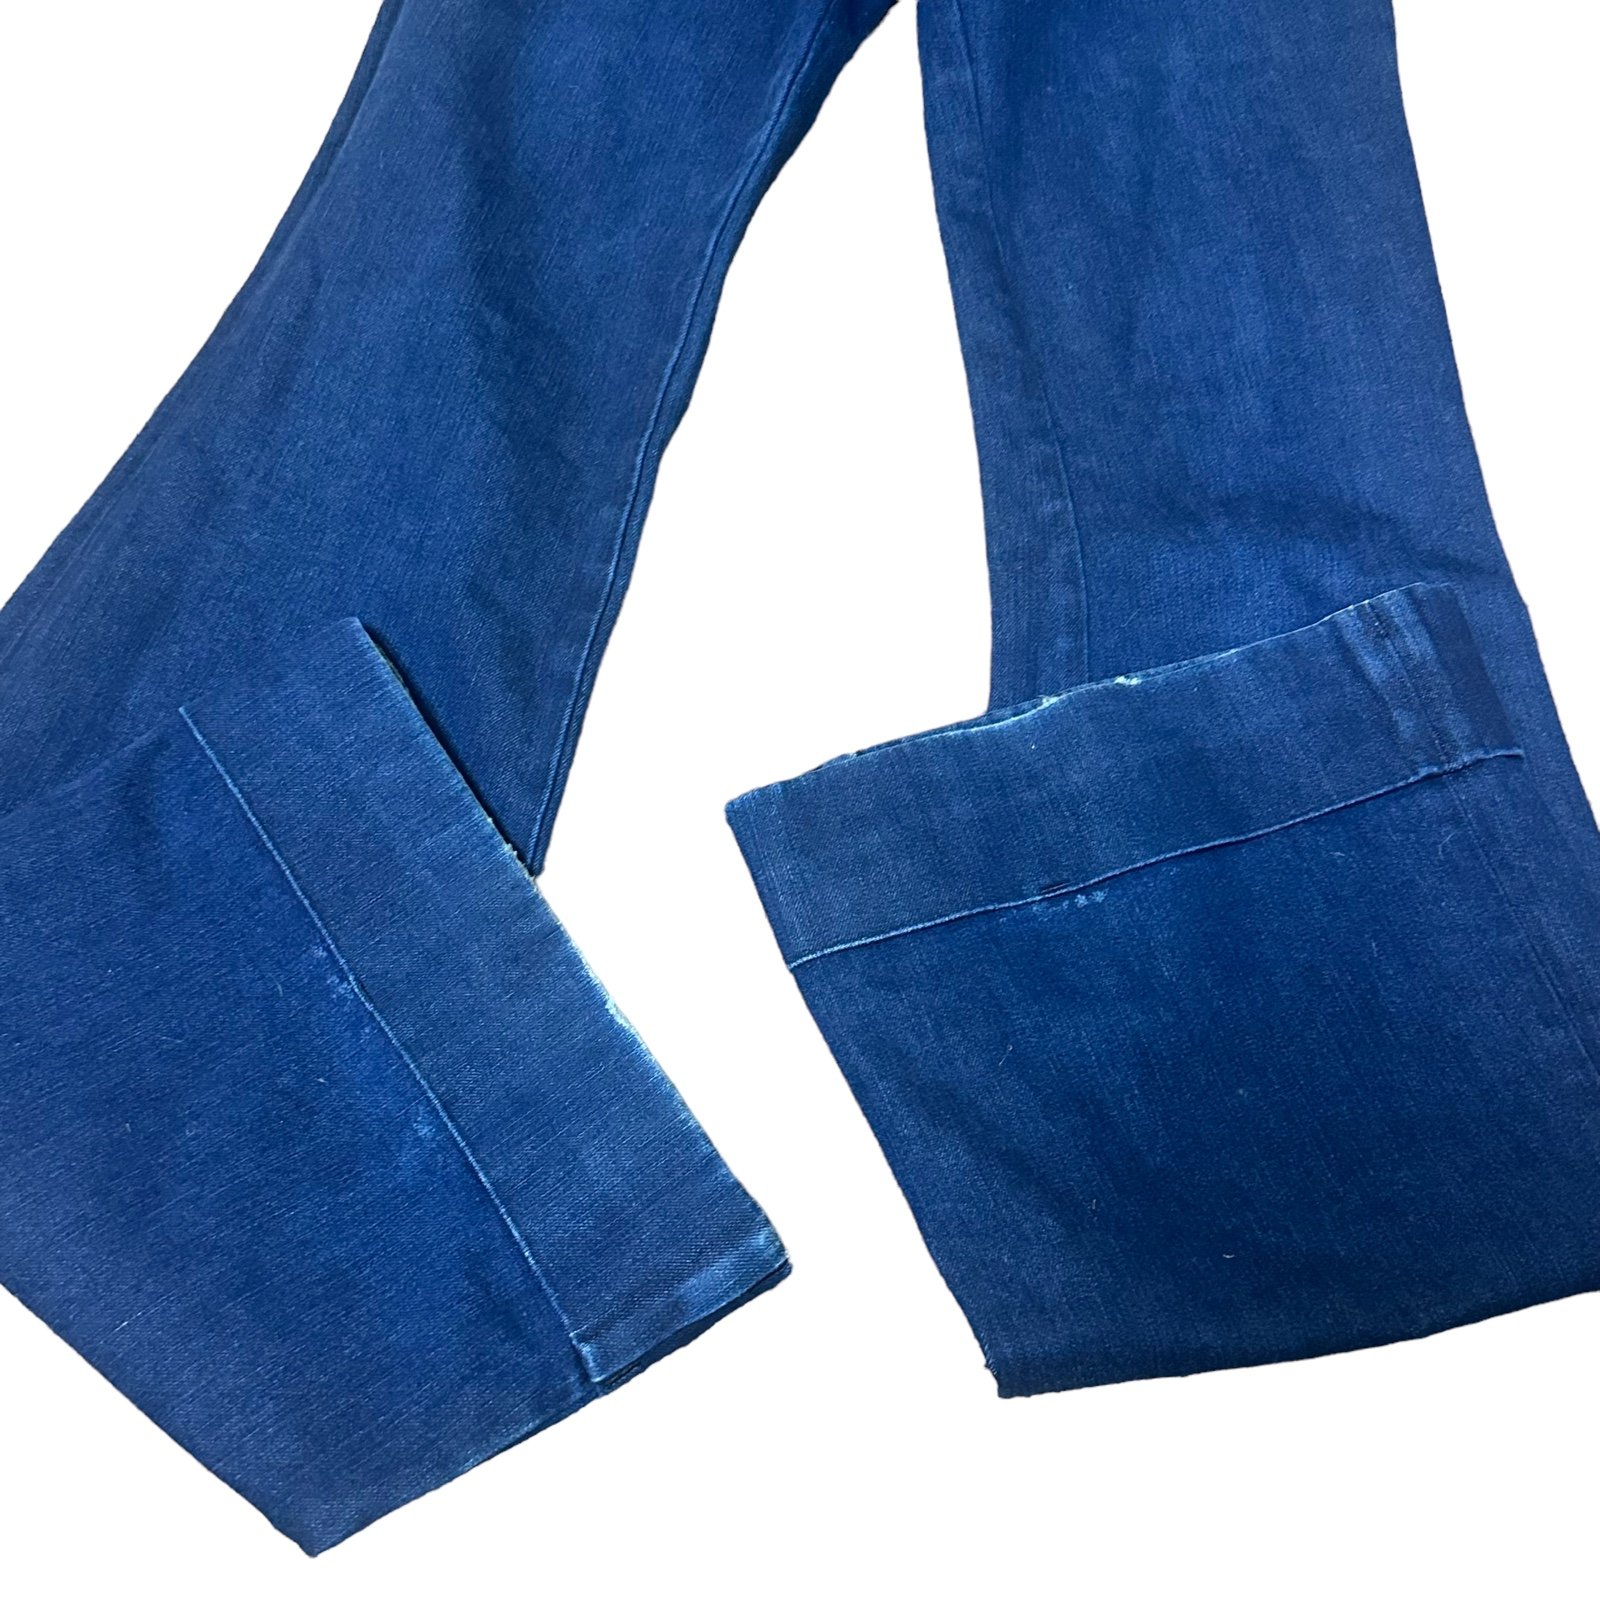 Affordable J Brand Womens Flare Dark Wash Denim Pants Jeans Size 25 LONG INSEAM j5HiWvnNP online store